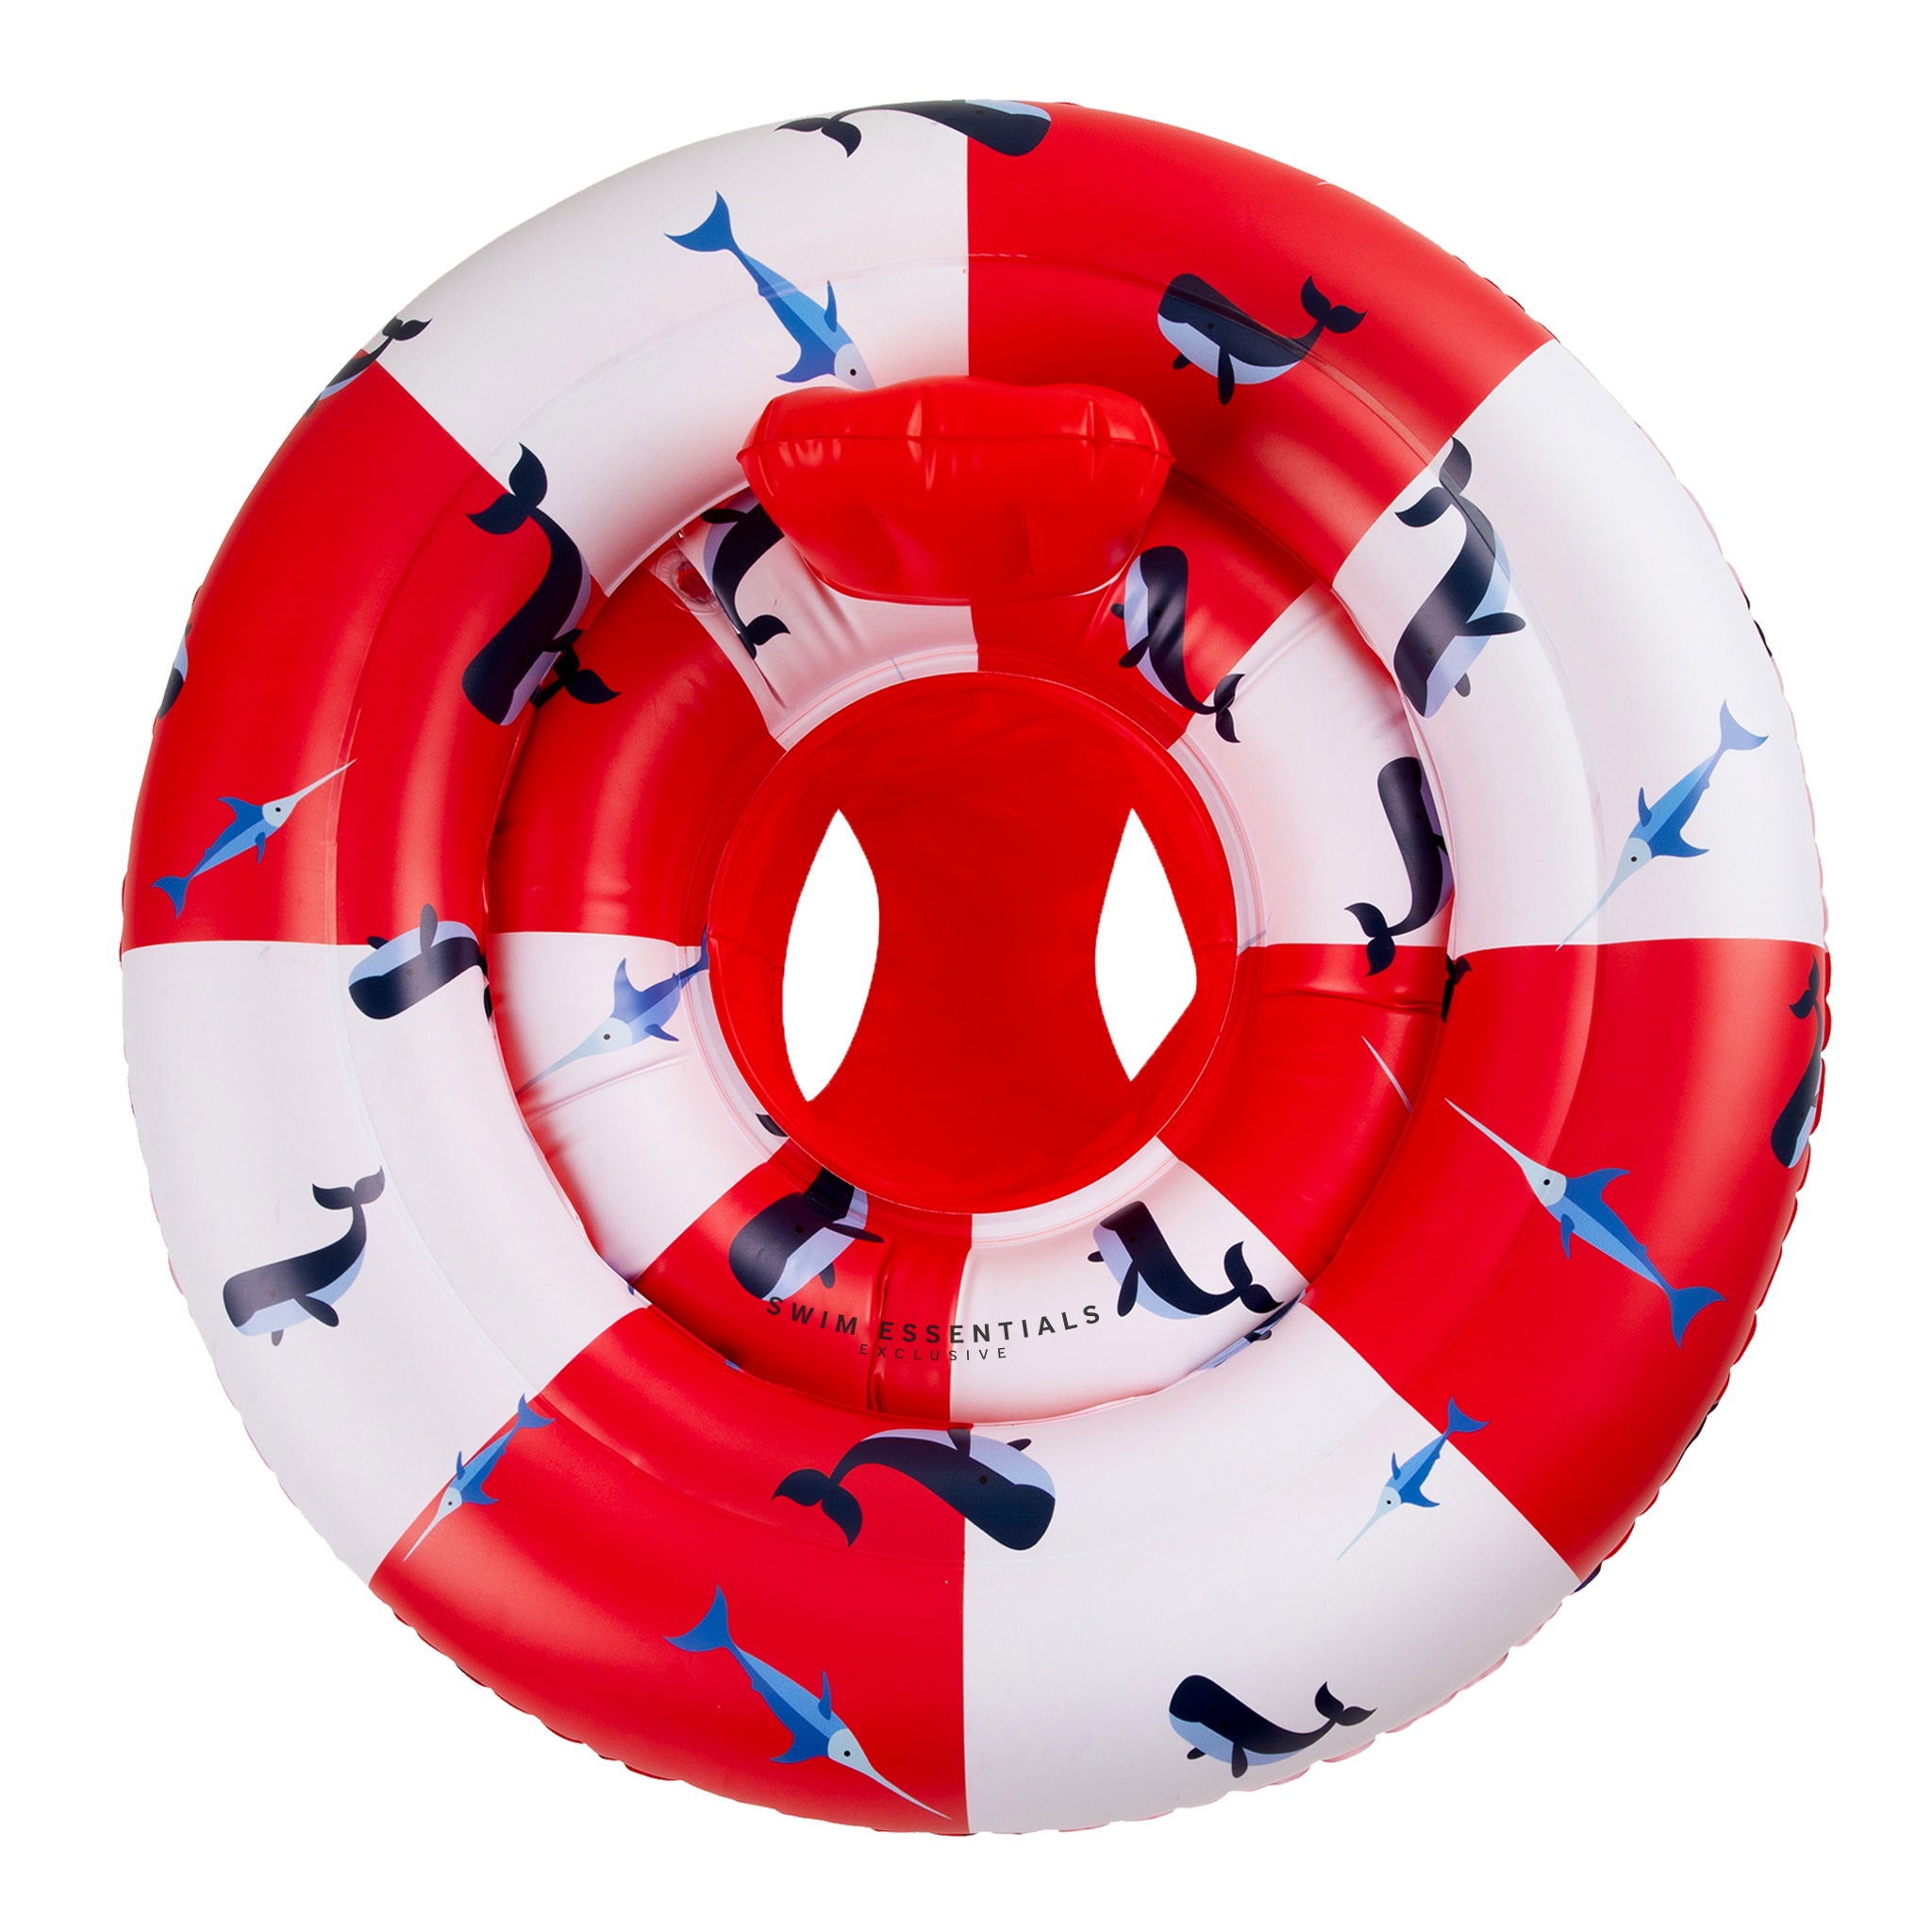 Swim Essentials Inflatable Baby Swim Seat 0-1 year